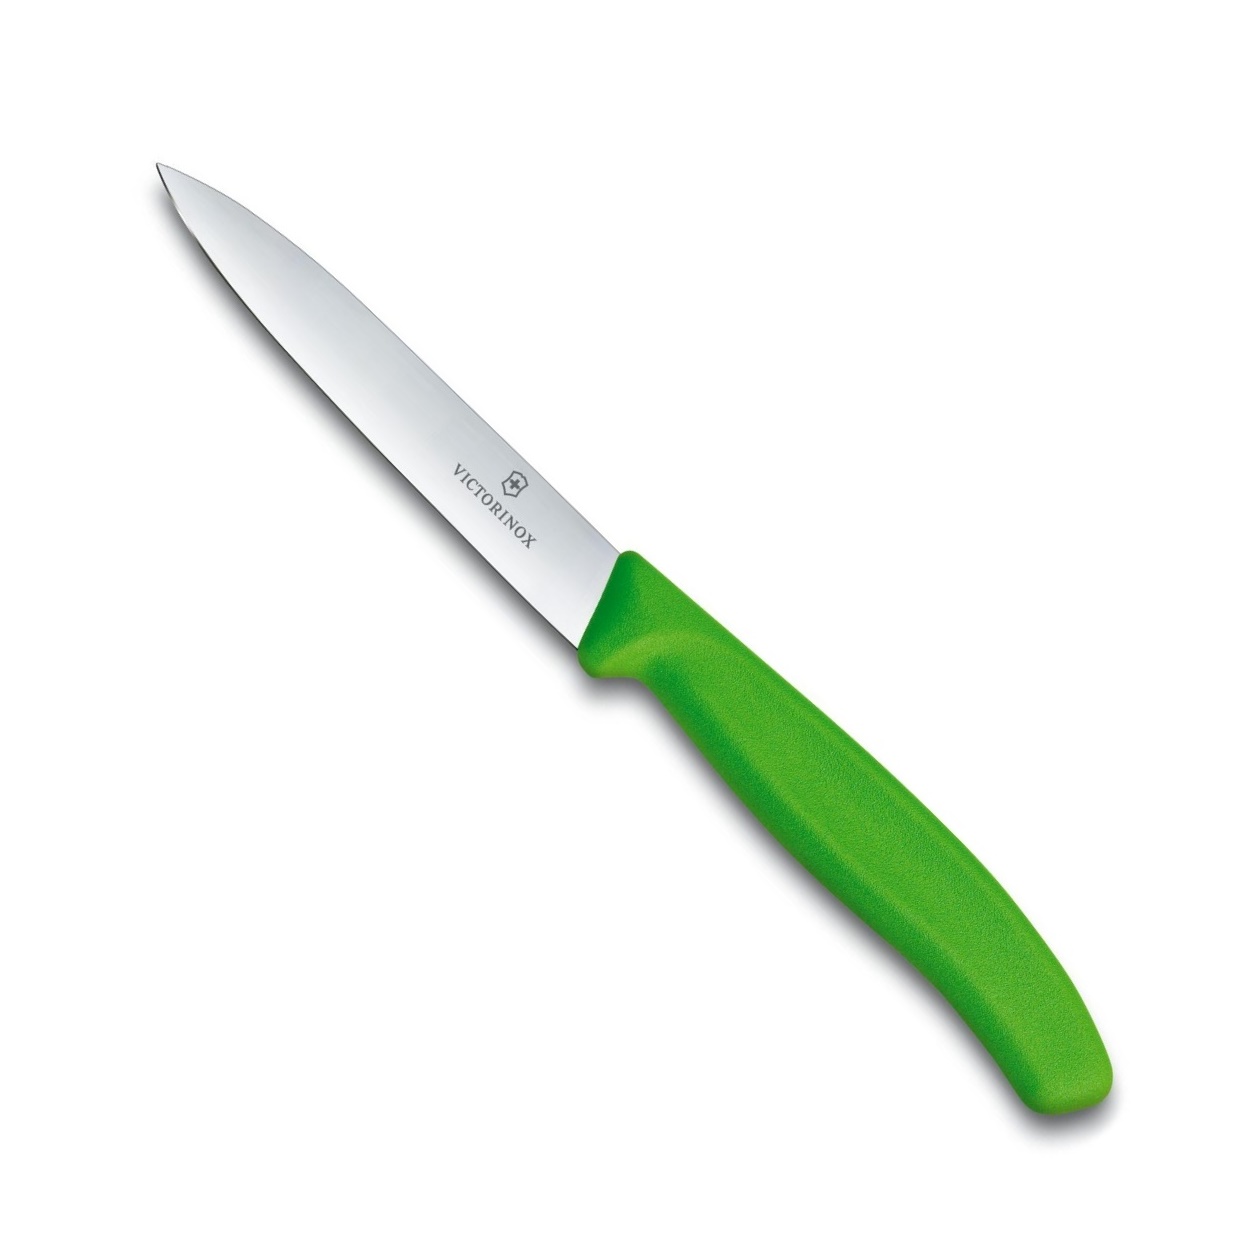 Nůž na zeleninu SWISS CLASSIC, zelený 10 cm - Victorinox